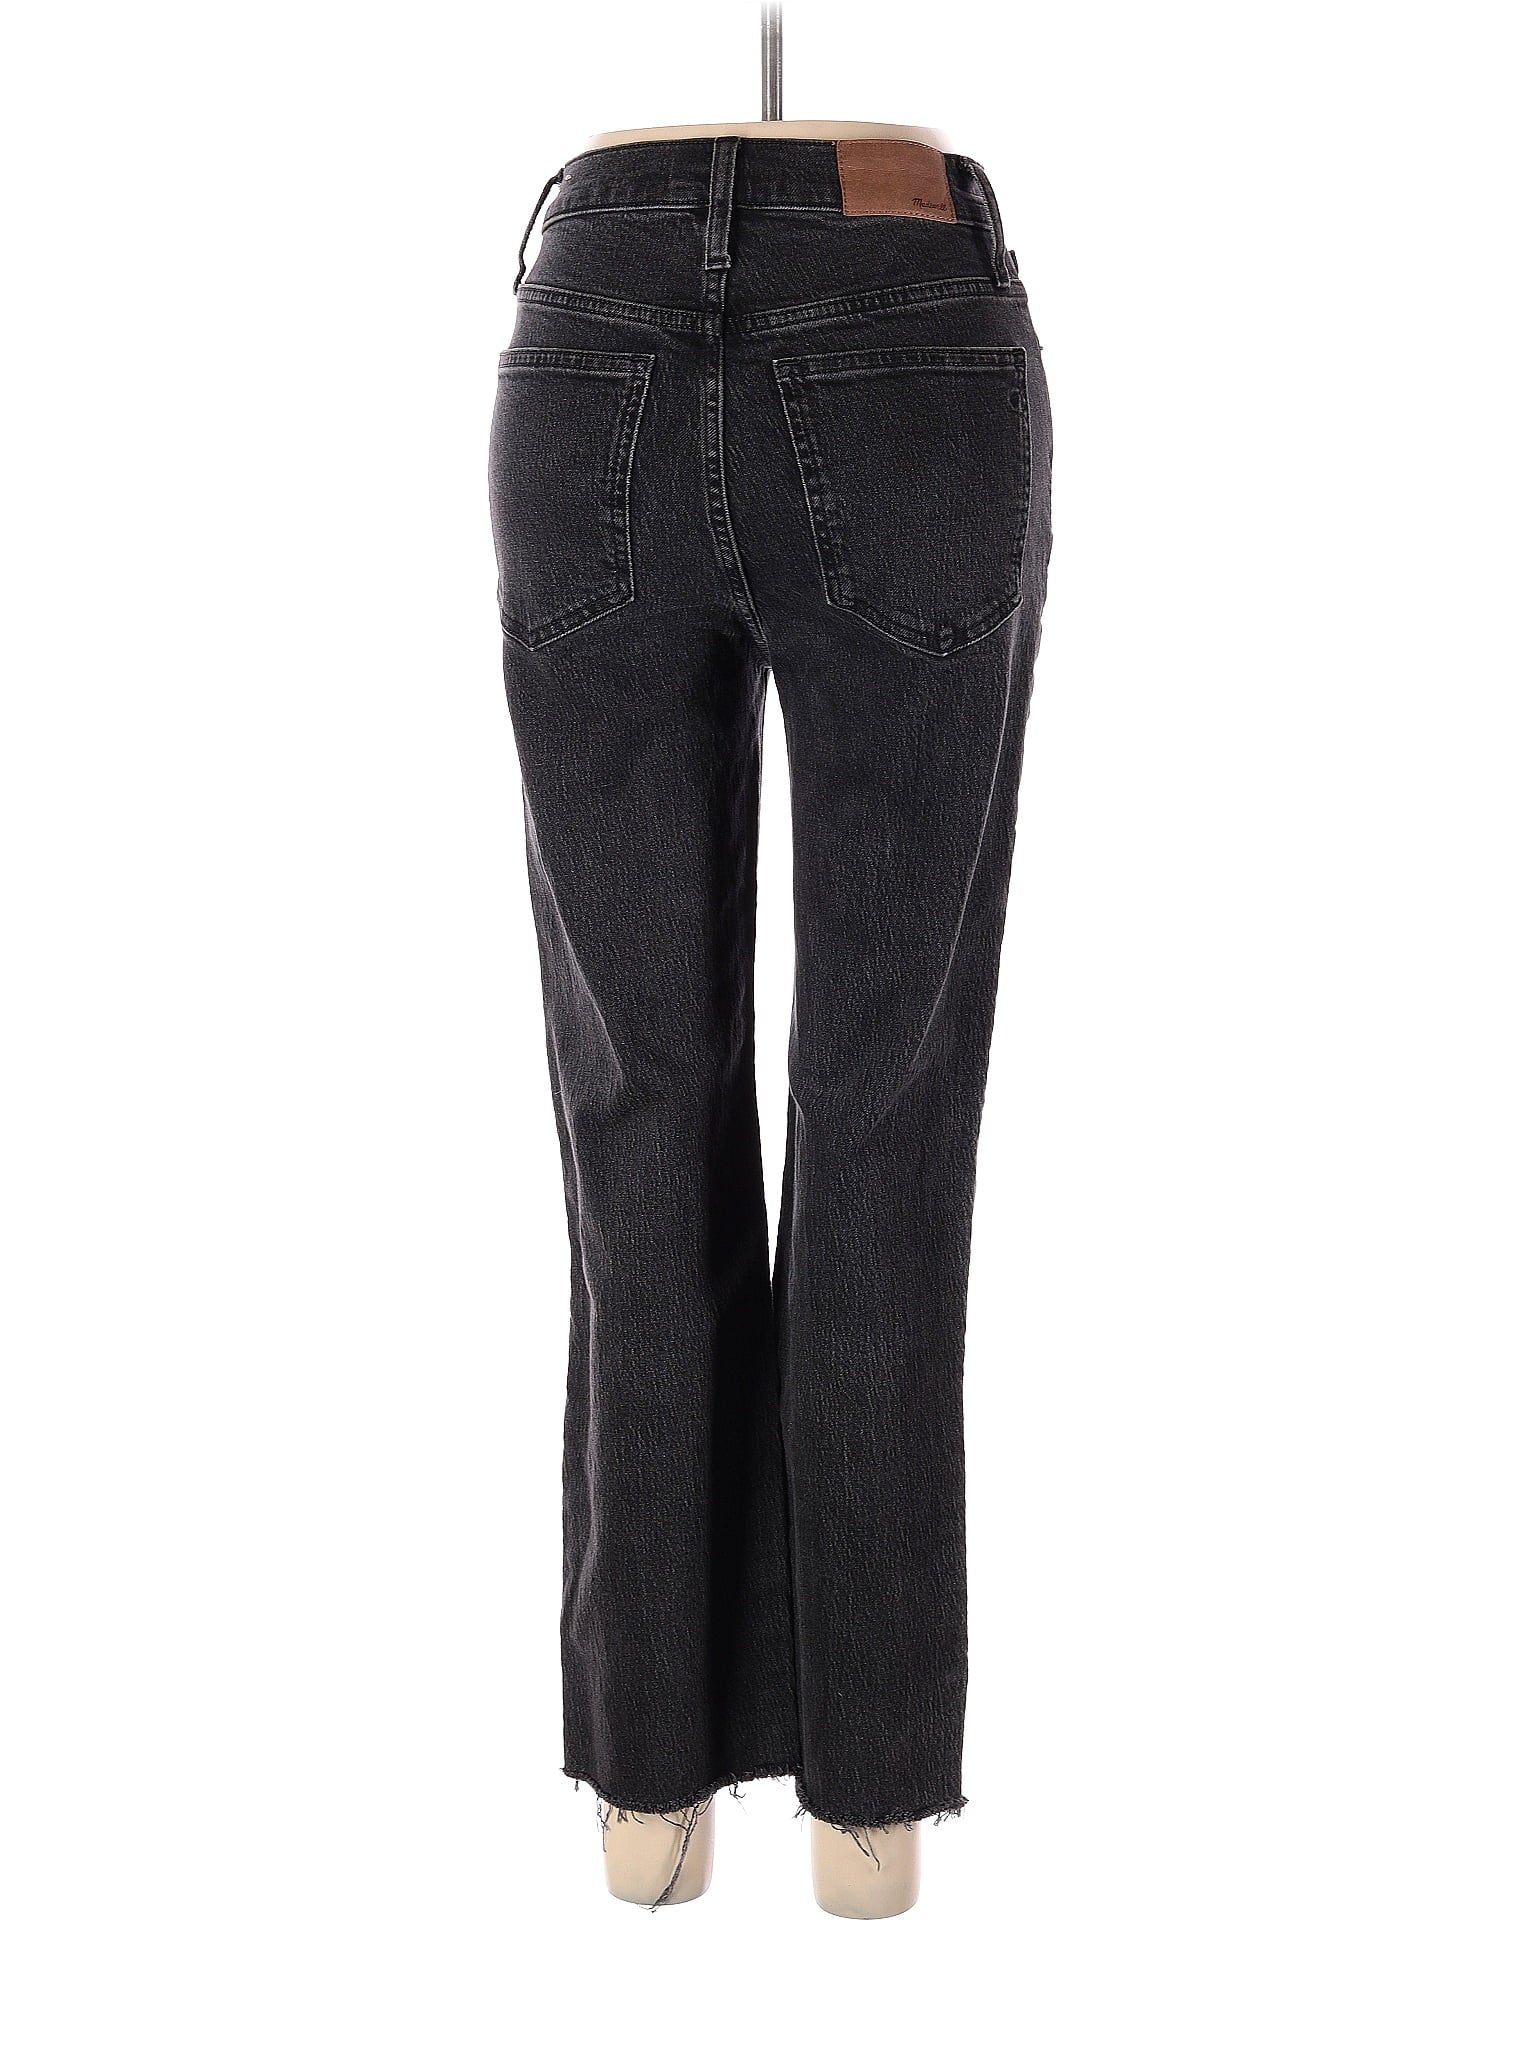 High-Rise Jeans waist size - 24